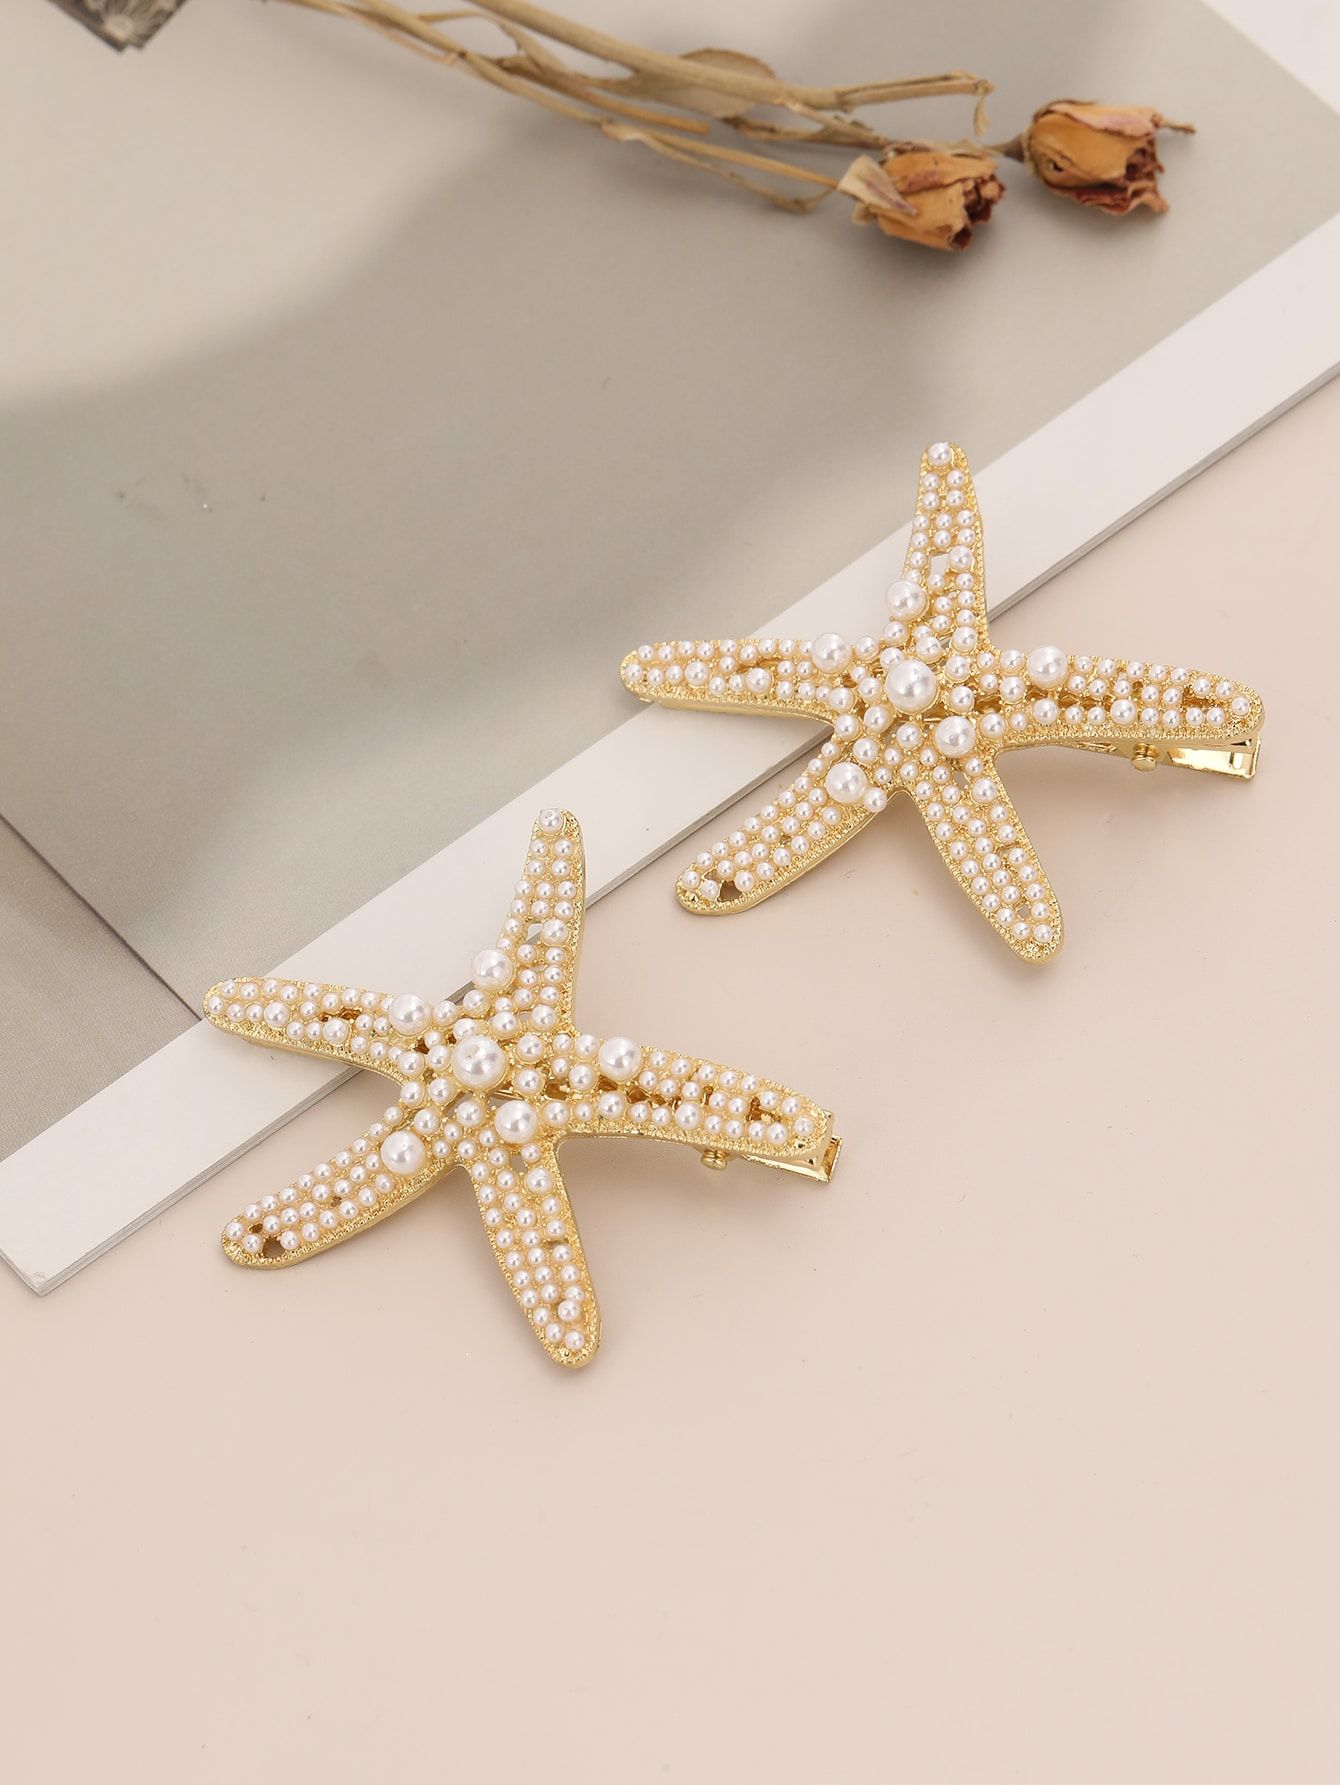 2pcs Faux Pearl Starfish Decor Hair Clip  SKU: sc2302061896918958(100+ Reviews)$2.60$2.47Join for... | SHEIN